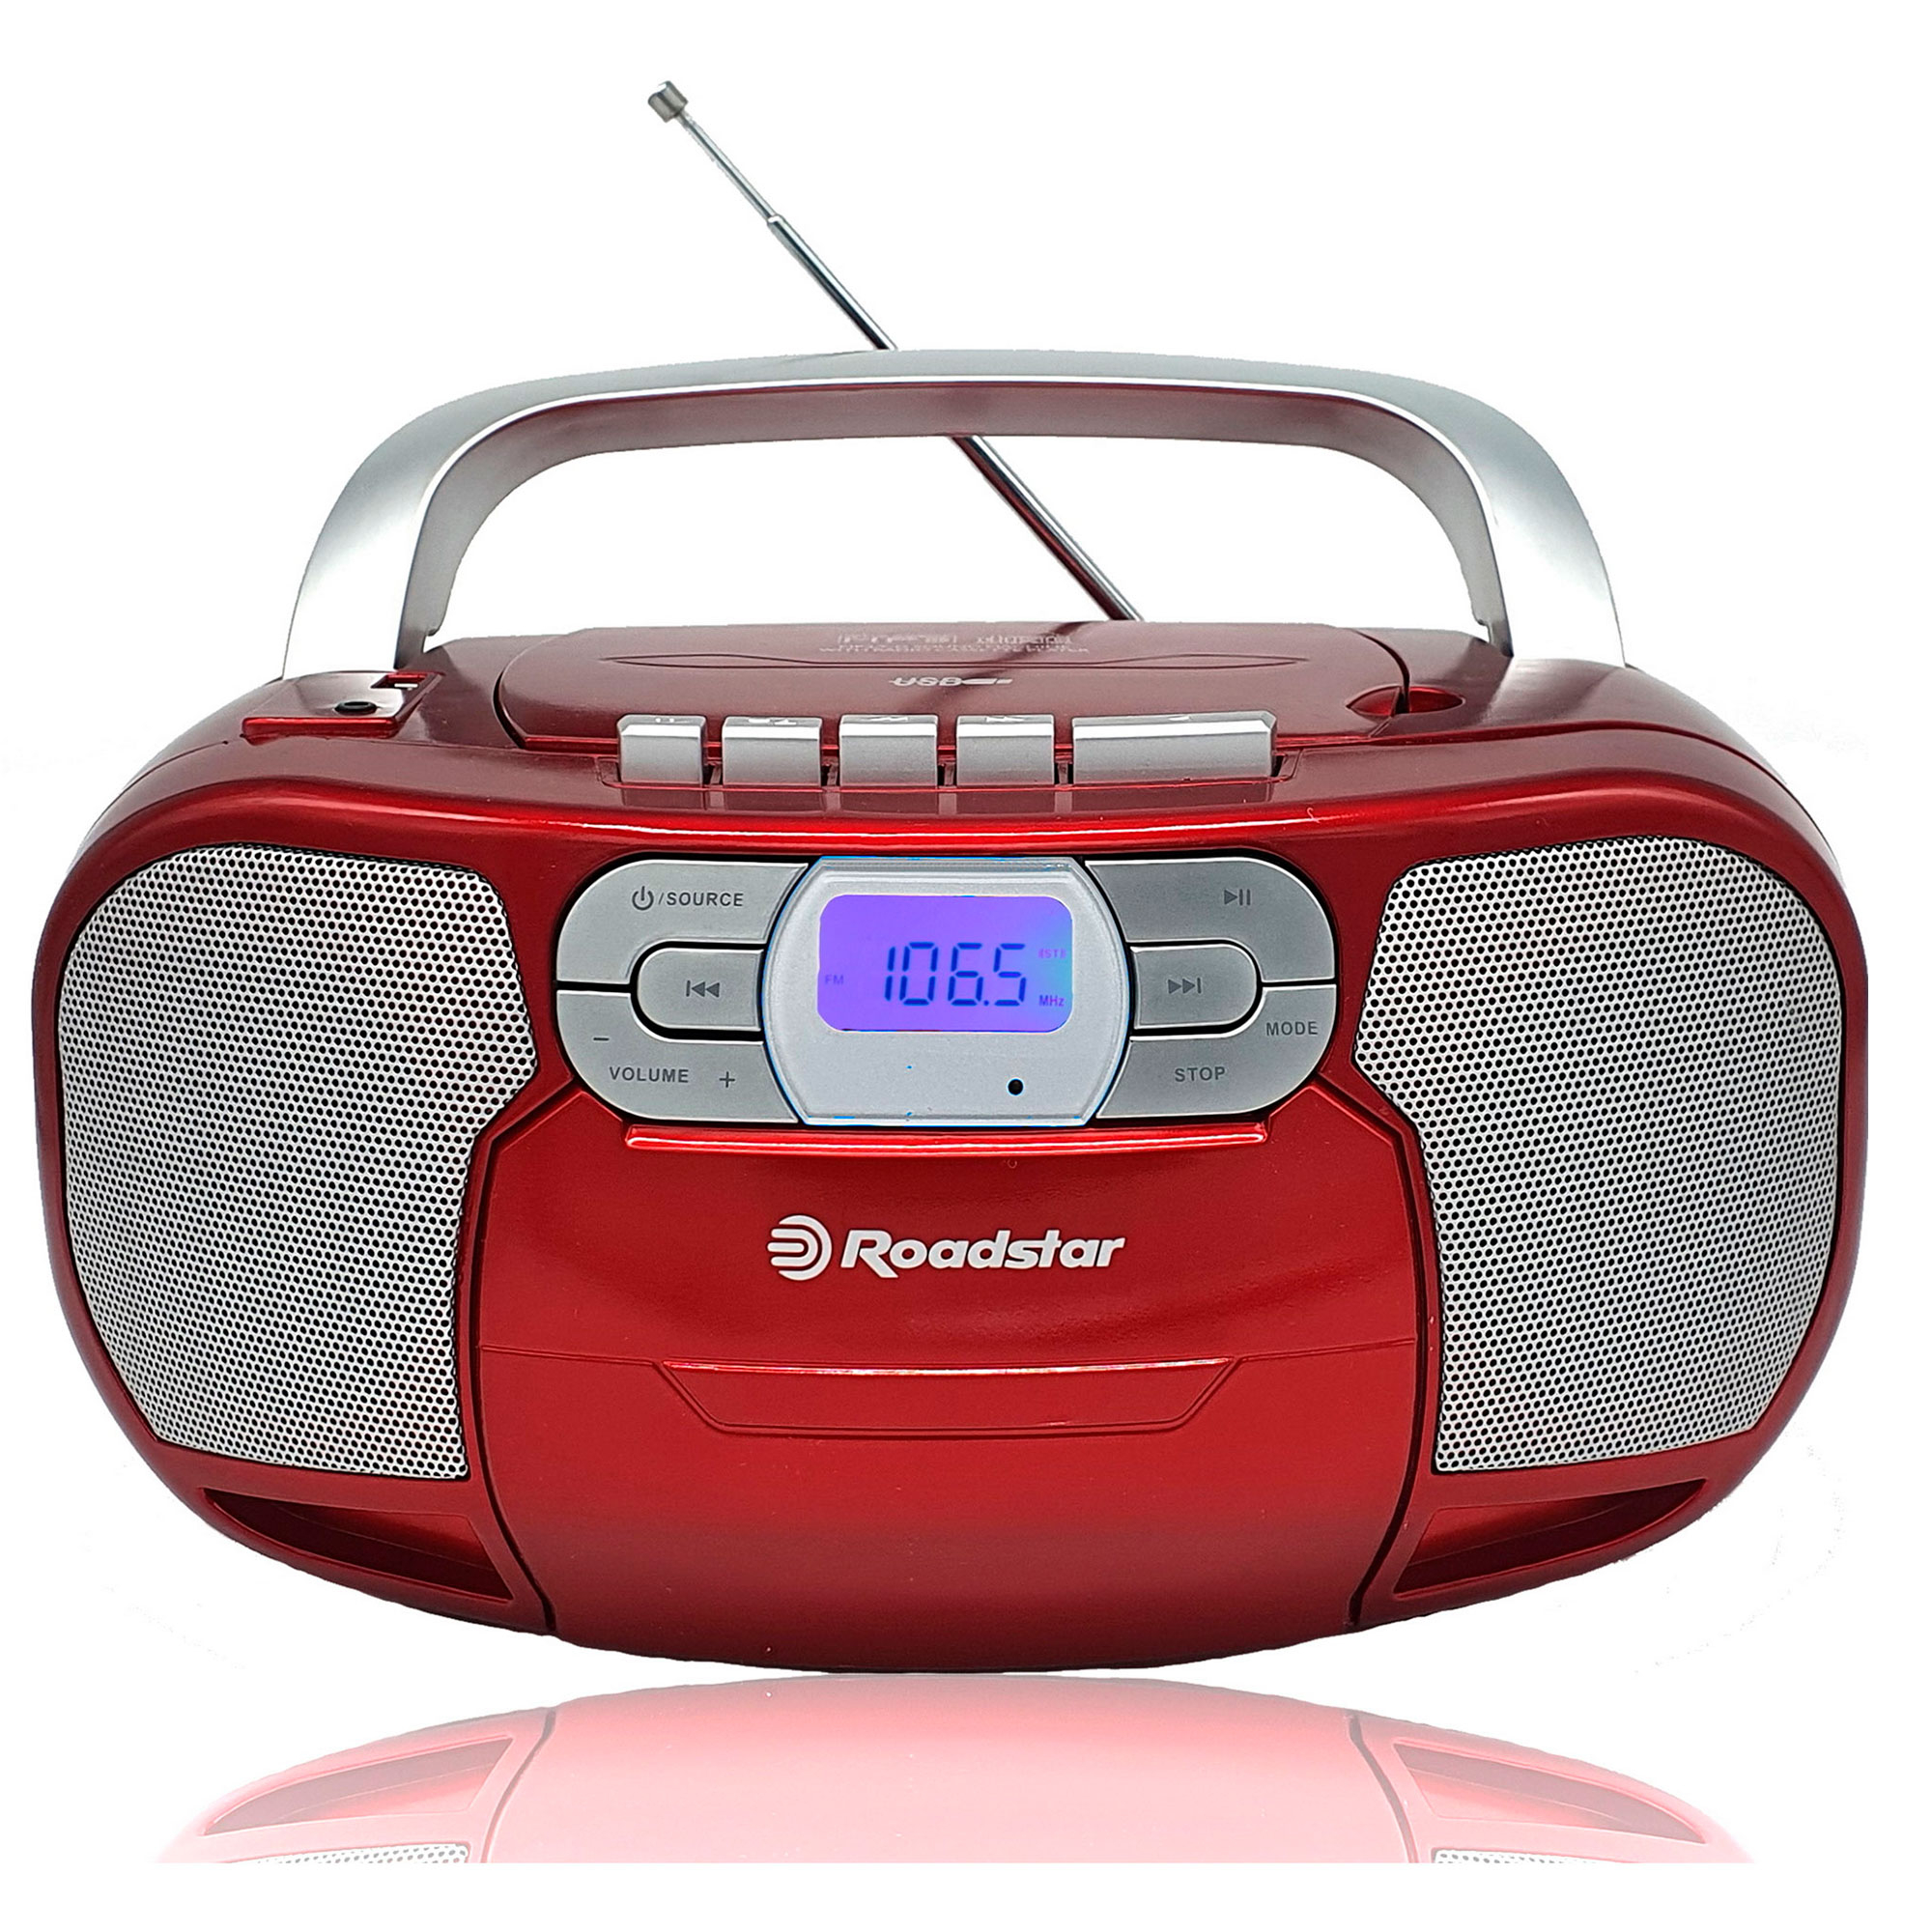 Roadstar RCR-4635UMP/RD Radio CD Portátil Cassette, Radio Digital PLL FM, Boombox Reproductor CD-MP3, USB, AUX-IN, Salida de Auriculares, Rojo